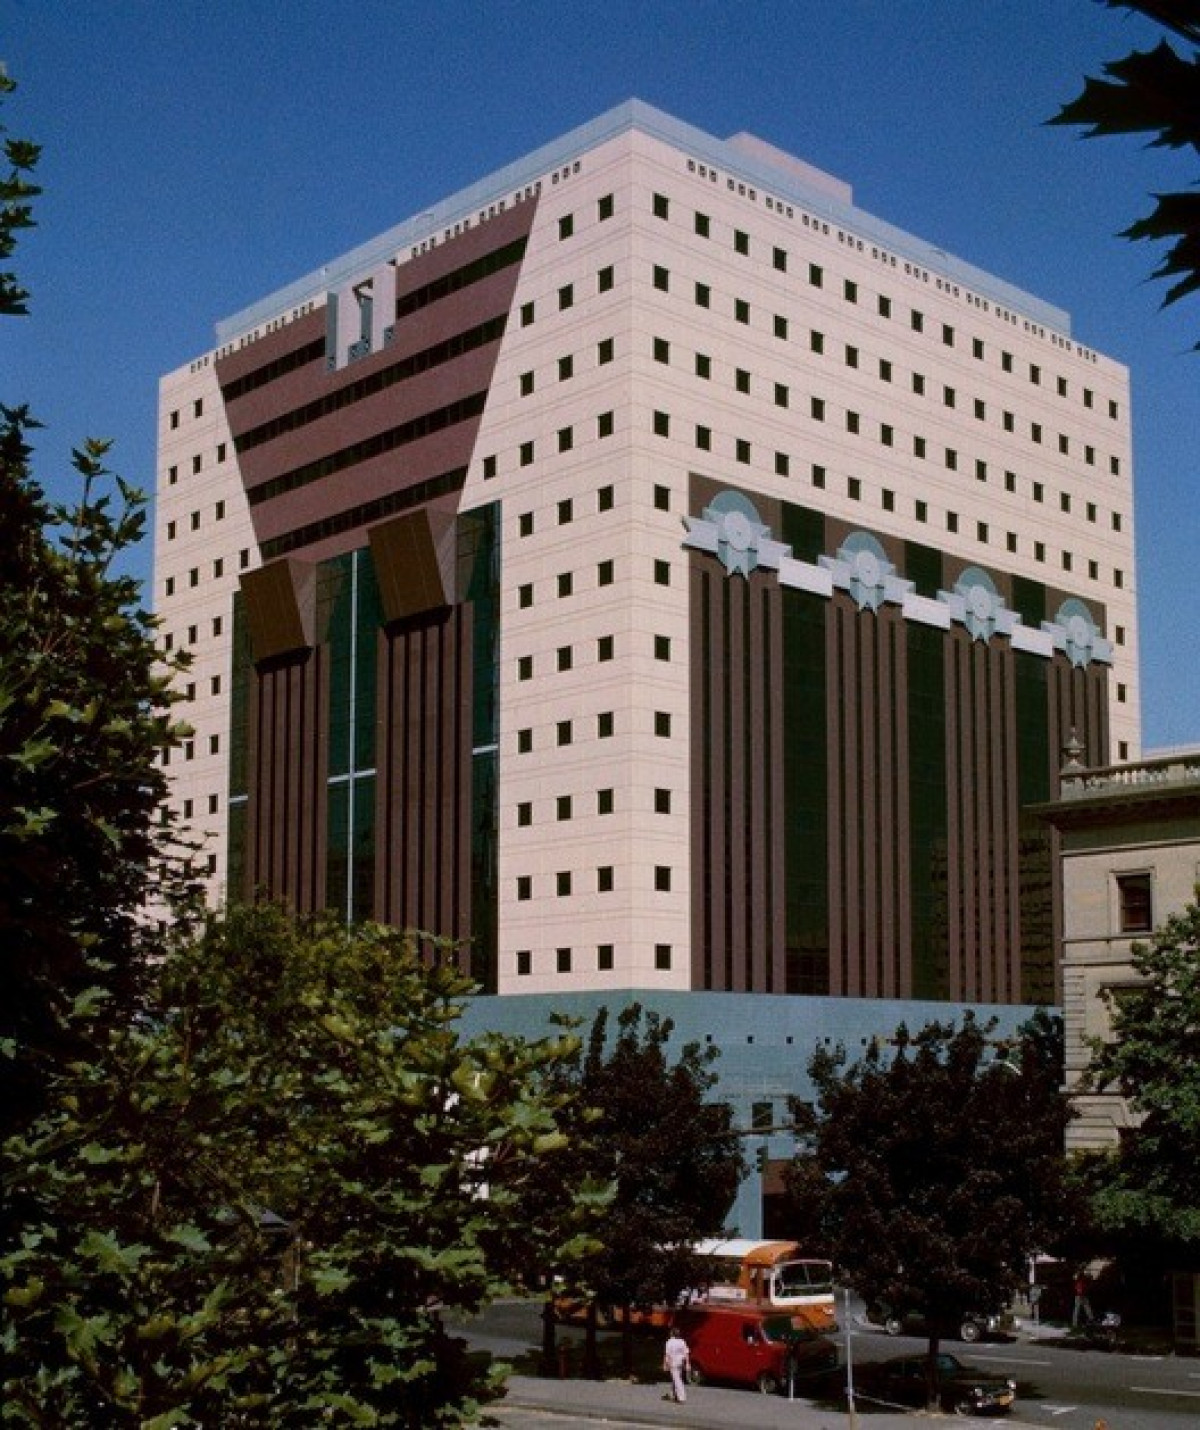 Portland Building (1982). Image © Wikimedia user Steve Morgan